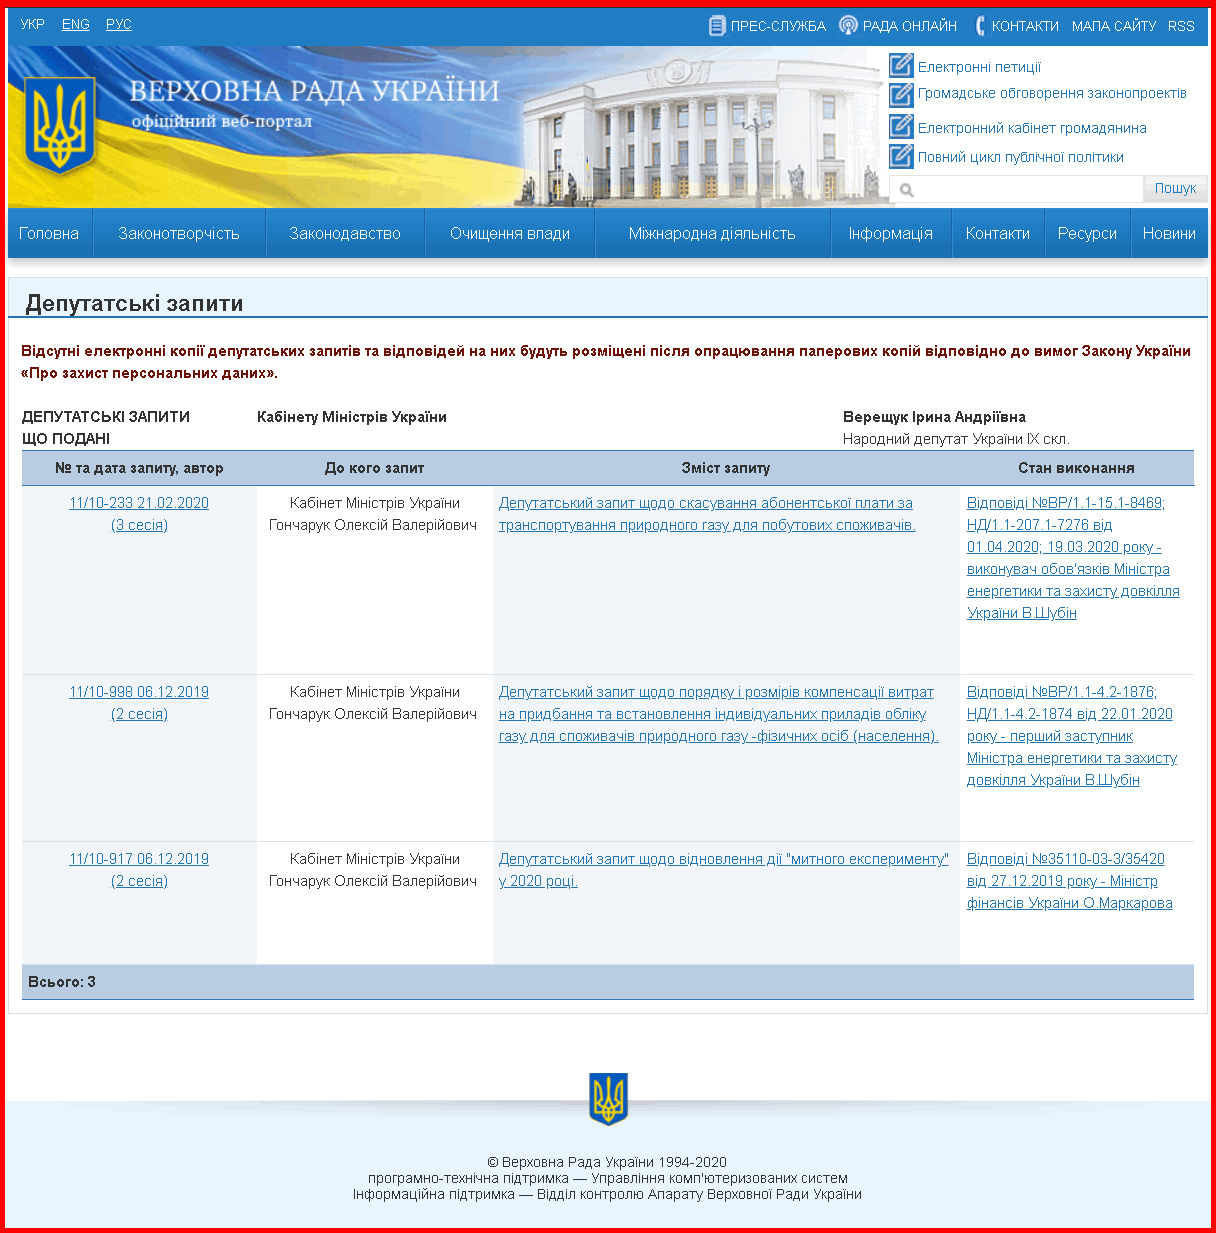 http://w1.c1.rada.gov.ua/pls/zweb2/wcadr43D?sklikannja=10&kodtip=5&rejim=1&KOD8011=21010